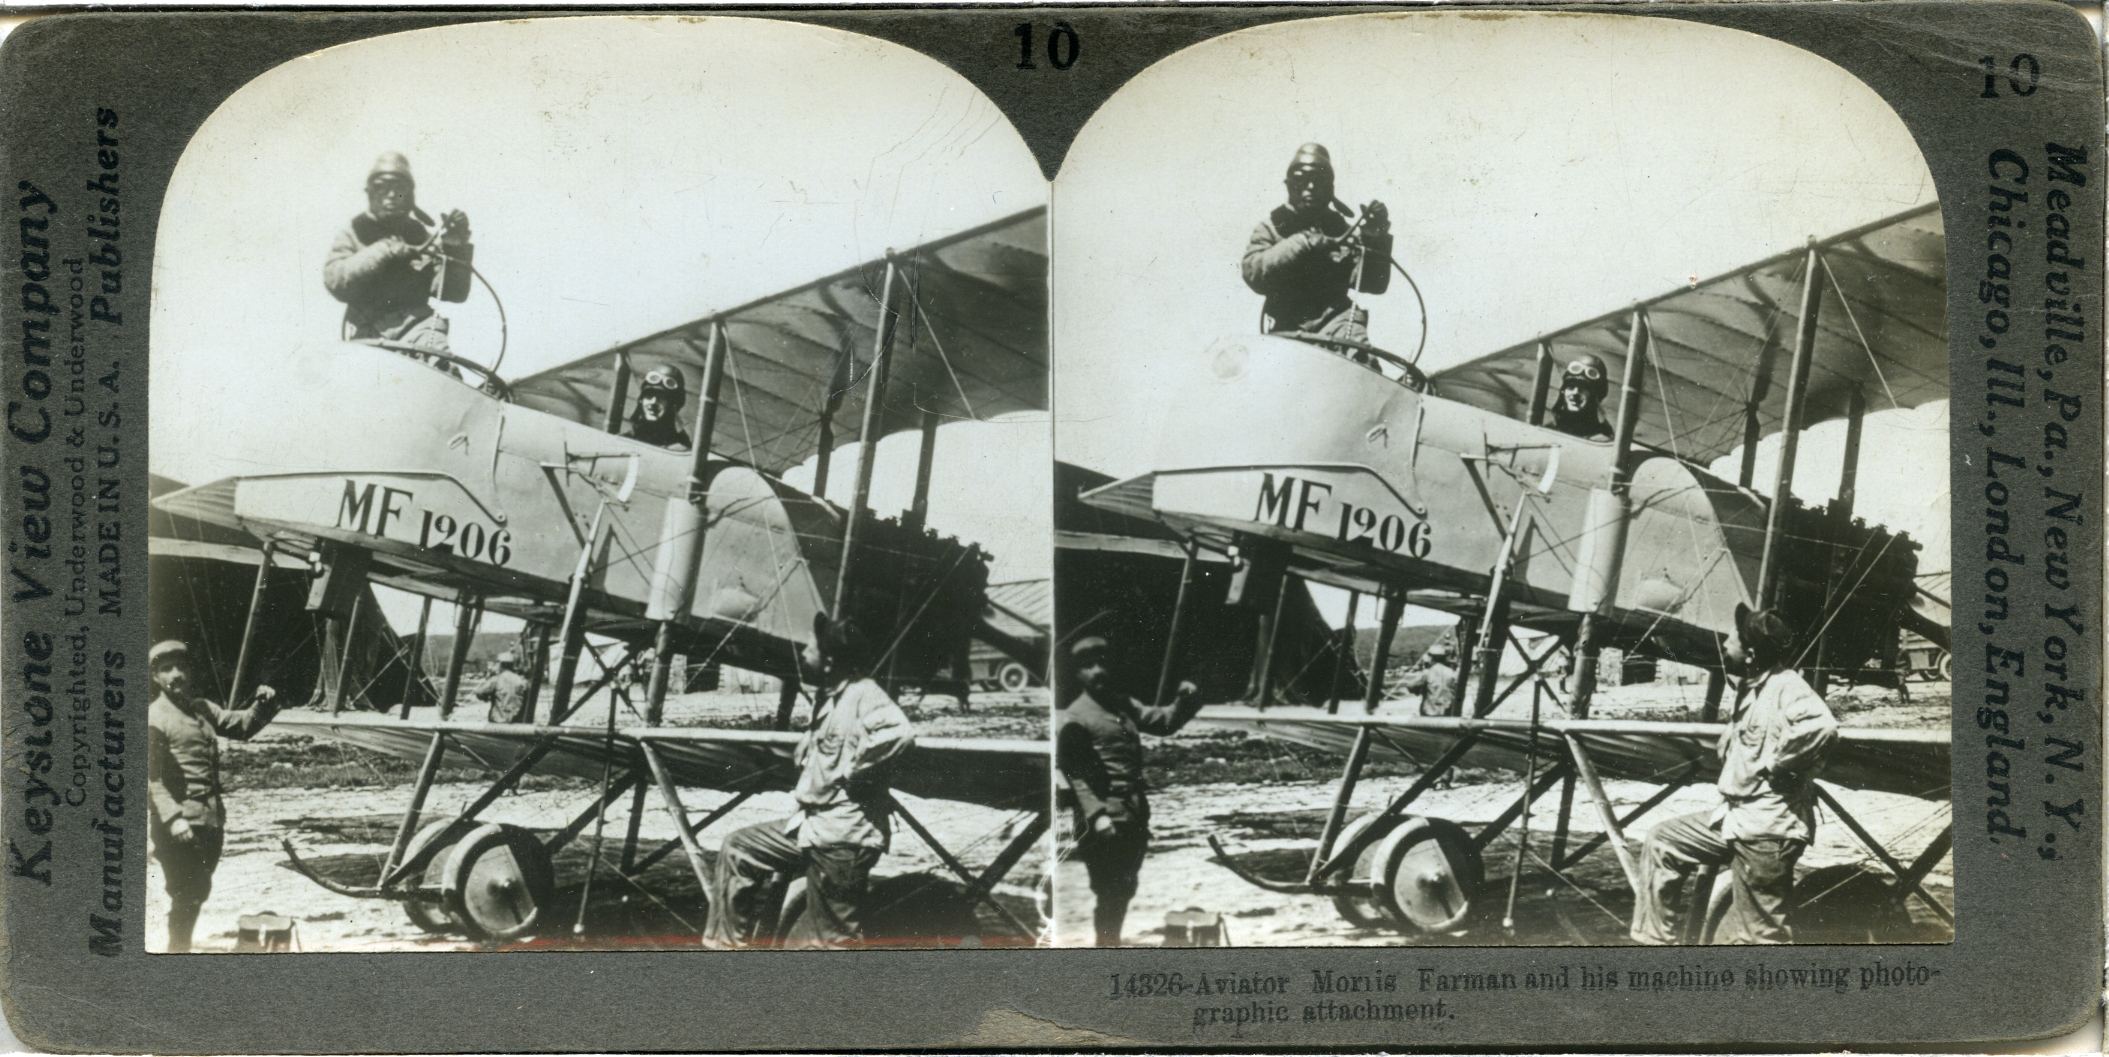 Aviator Morris Farman and his machine showing photographic attachment